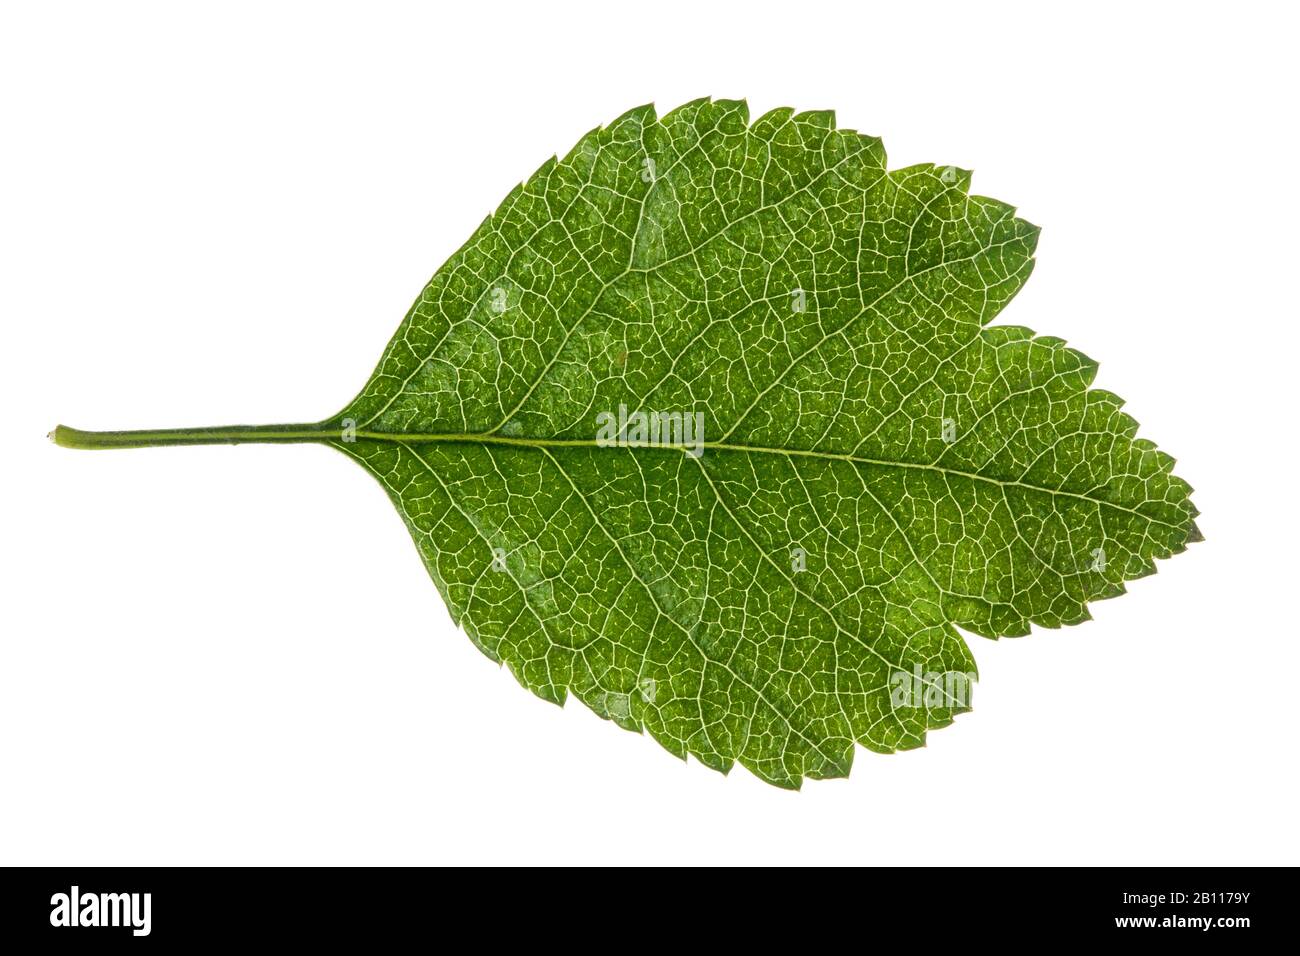 English hawthorn, midland hawthorn (Crataegus laevigata), leaf, cutout, Germany Stock Photo